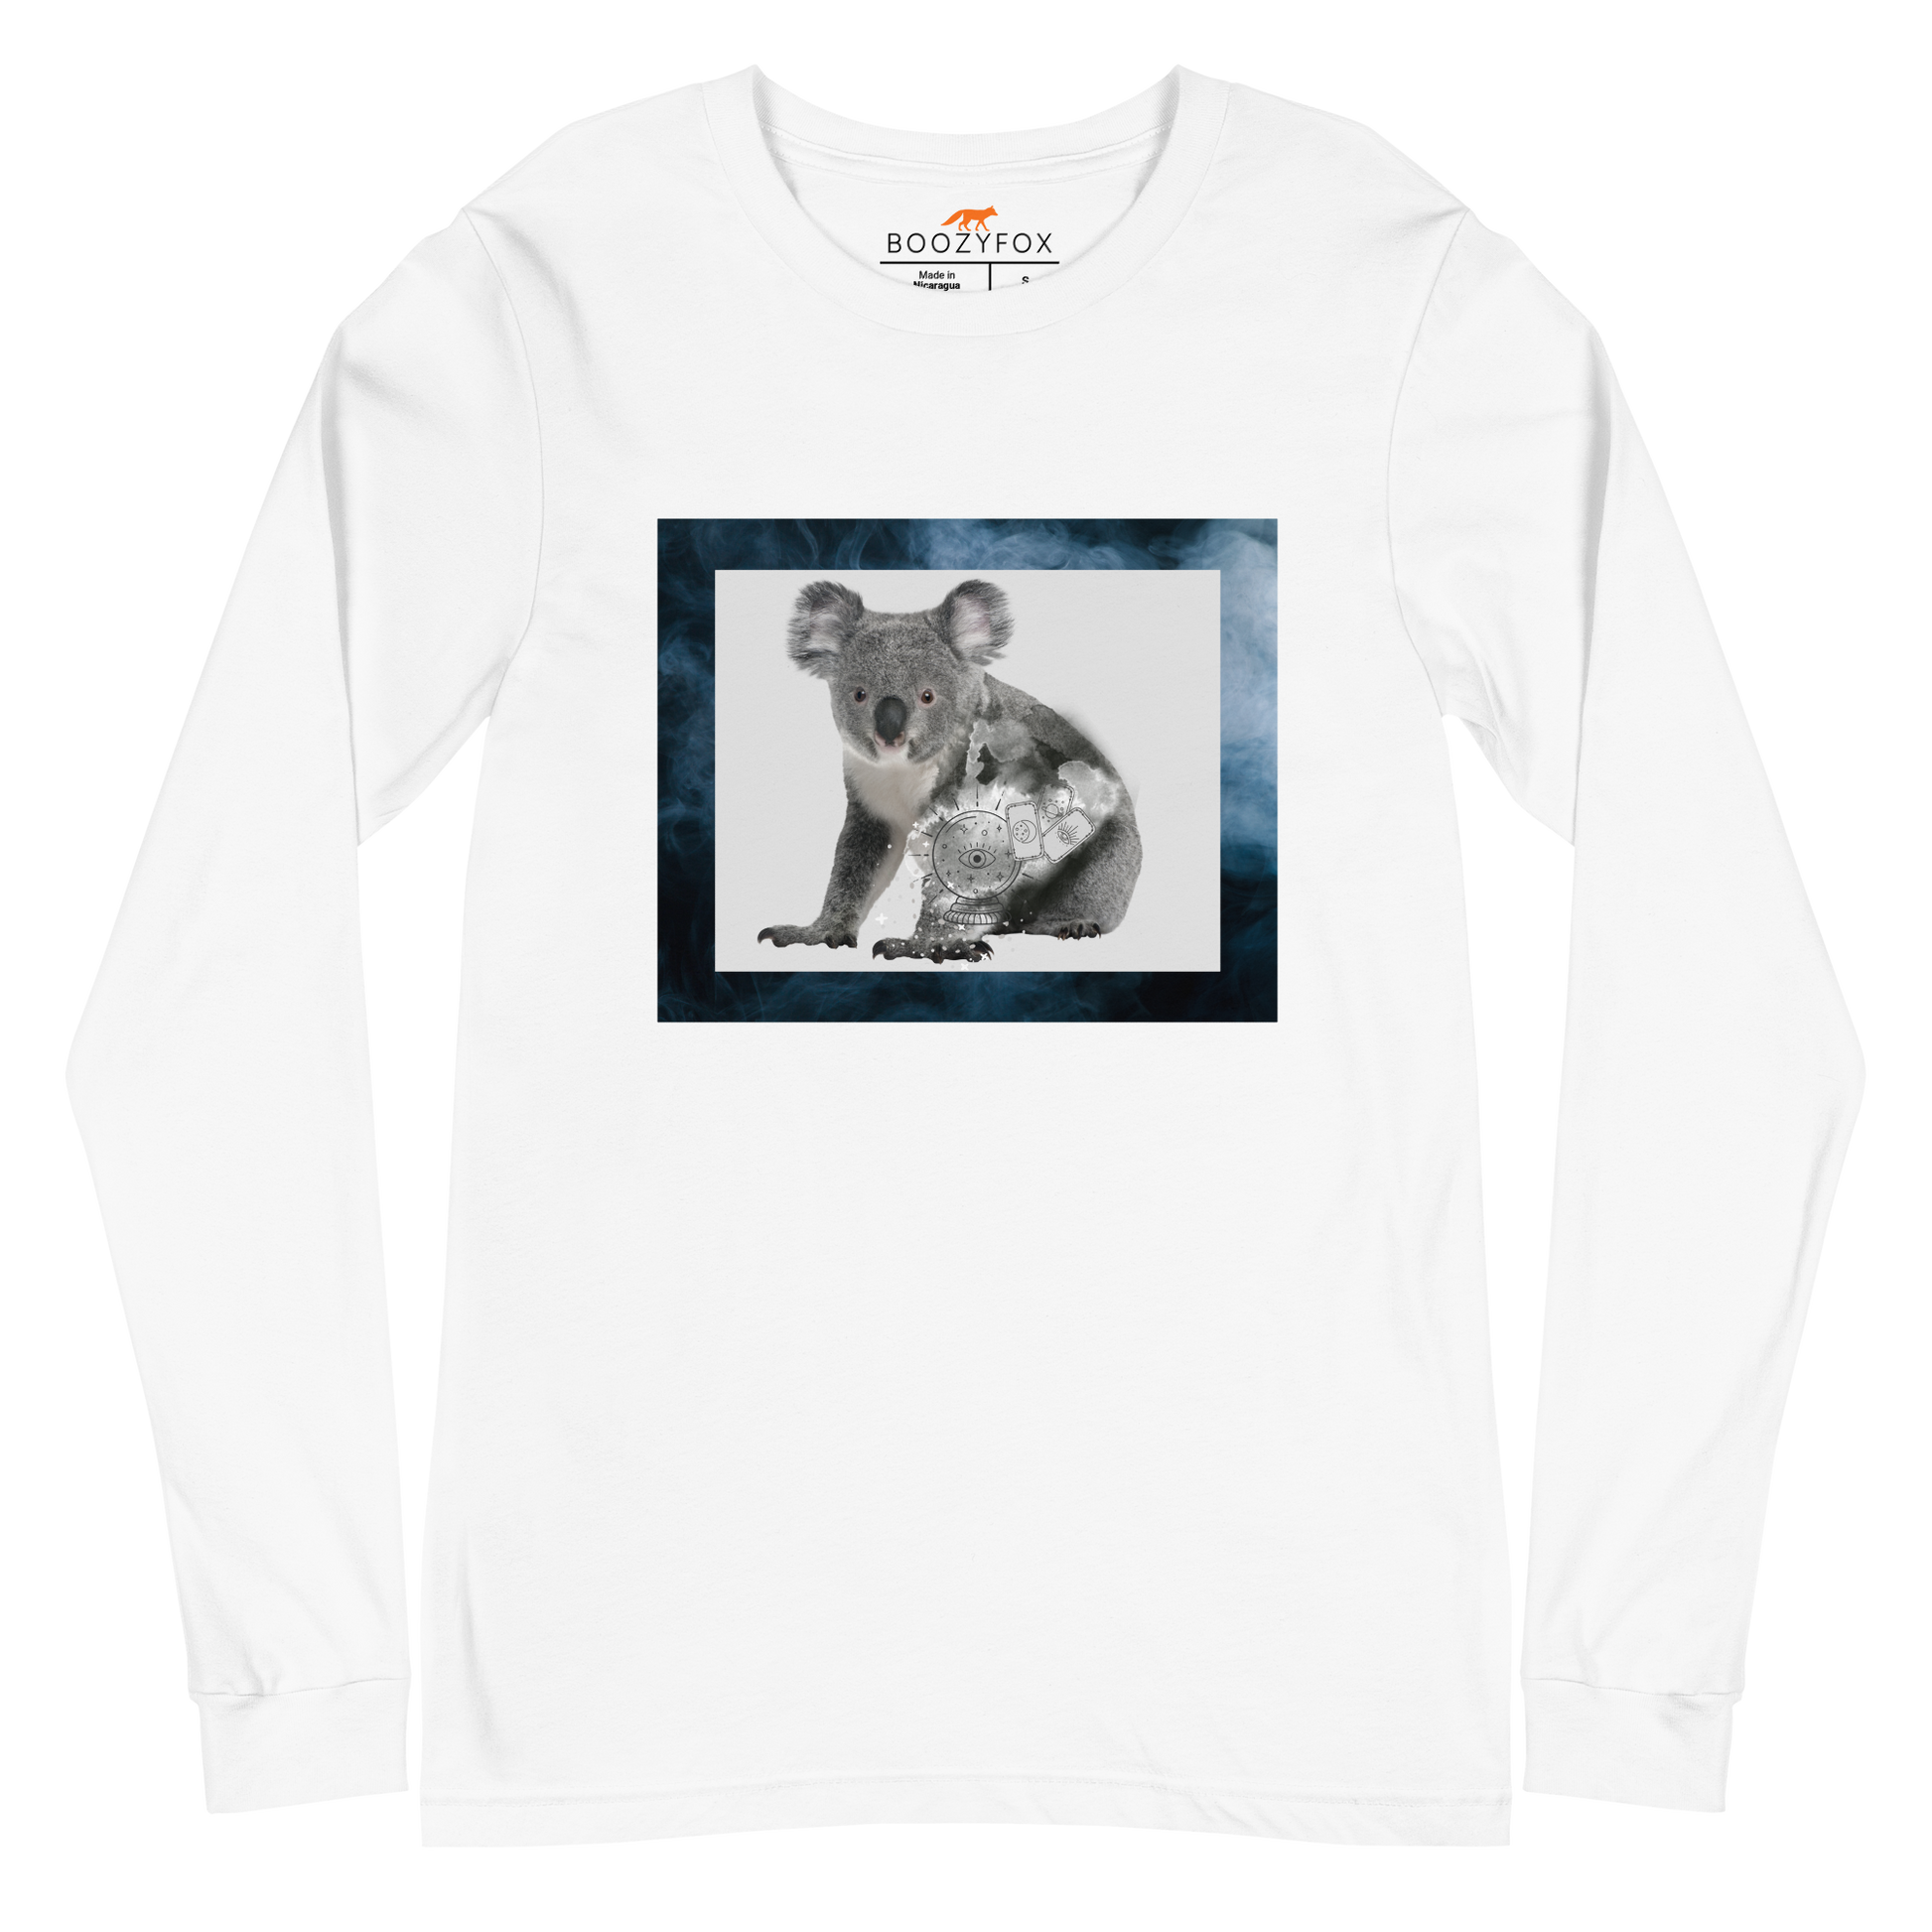 White Koala Long Sleeve Tee featuring a Mystical Koala graphic on the chest - Cool Koala Long Sleeve Graphic Tees - Boozy Fox